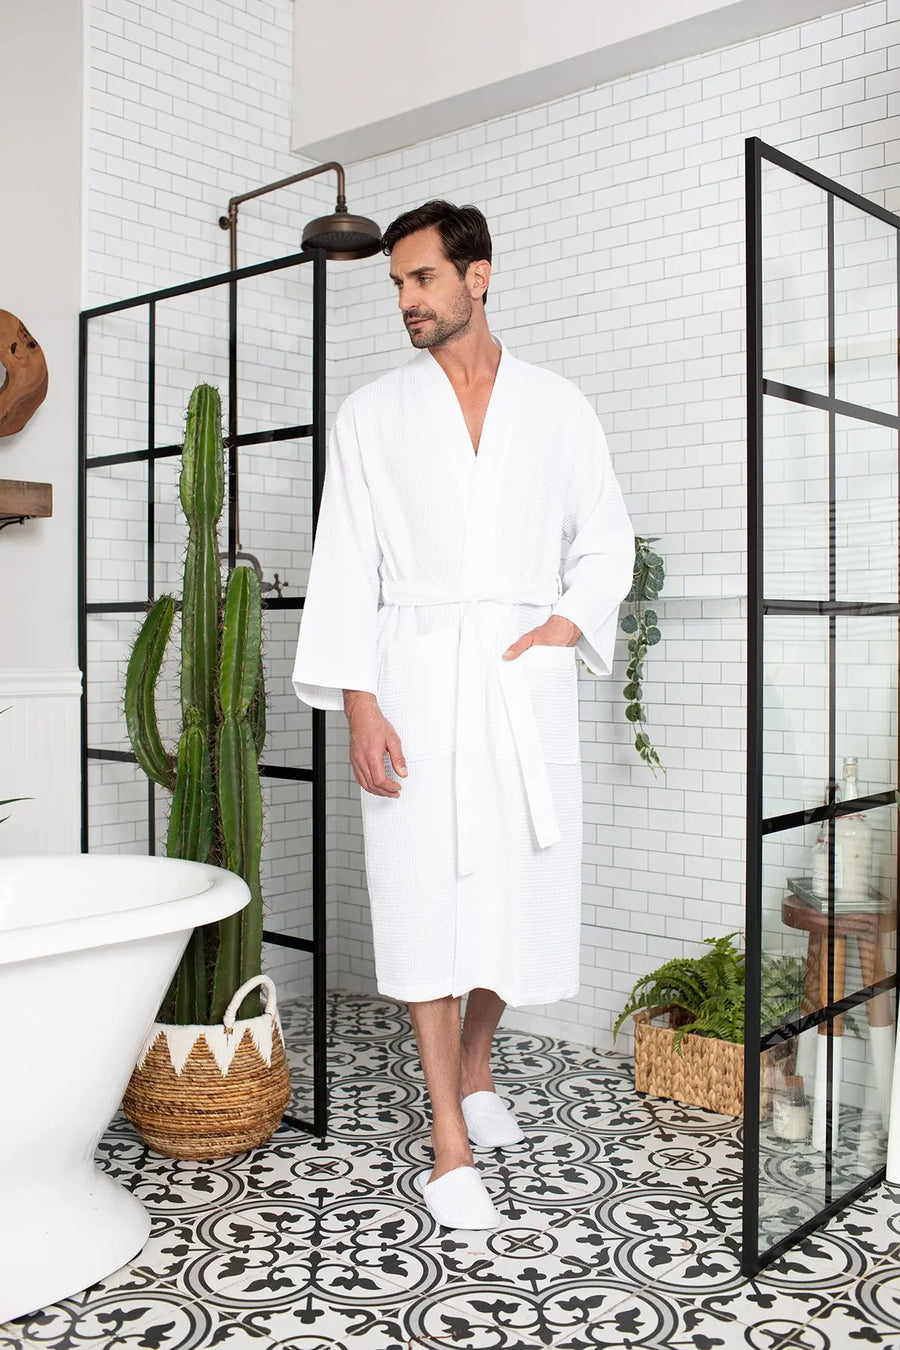 White Linen Bath Towel Waffle, Large Towel, Bath Towel, Massage